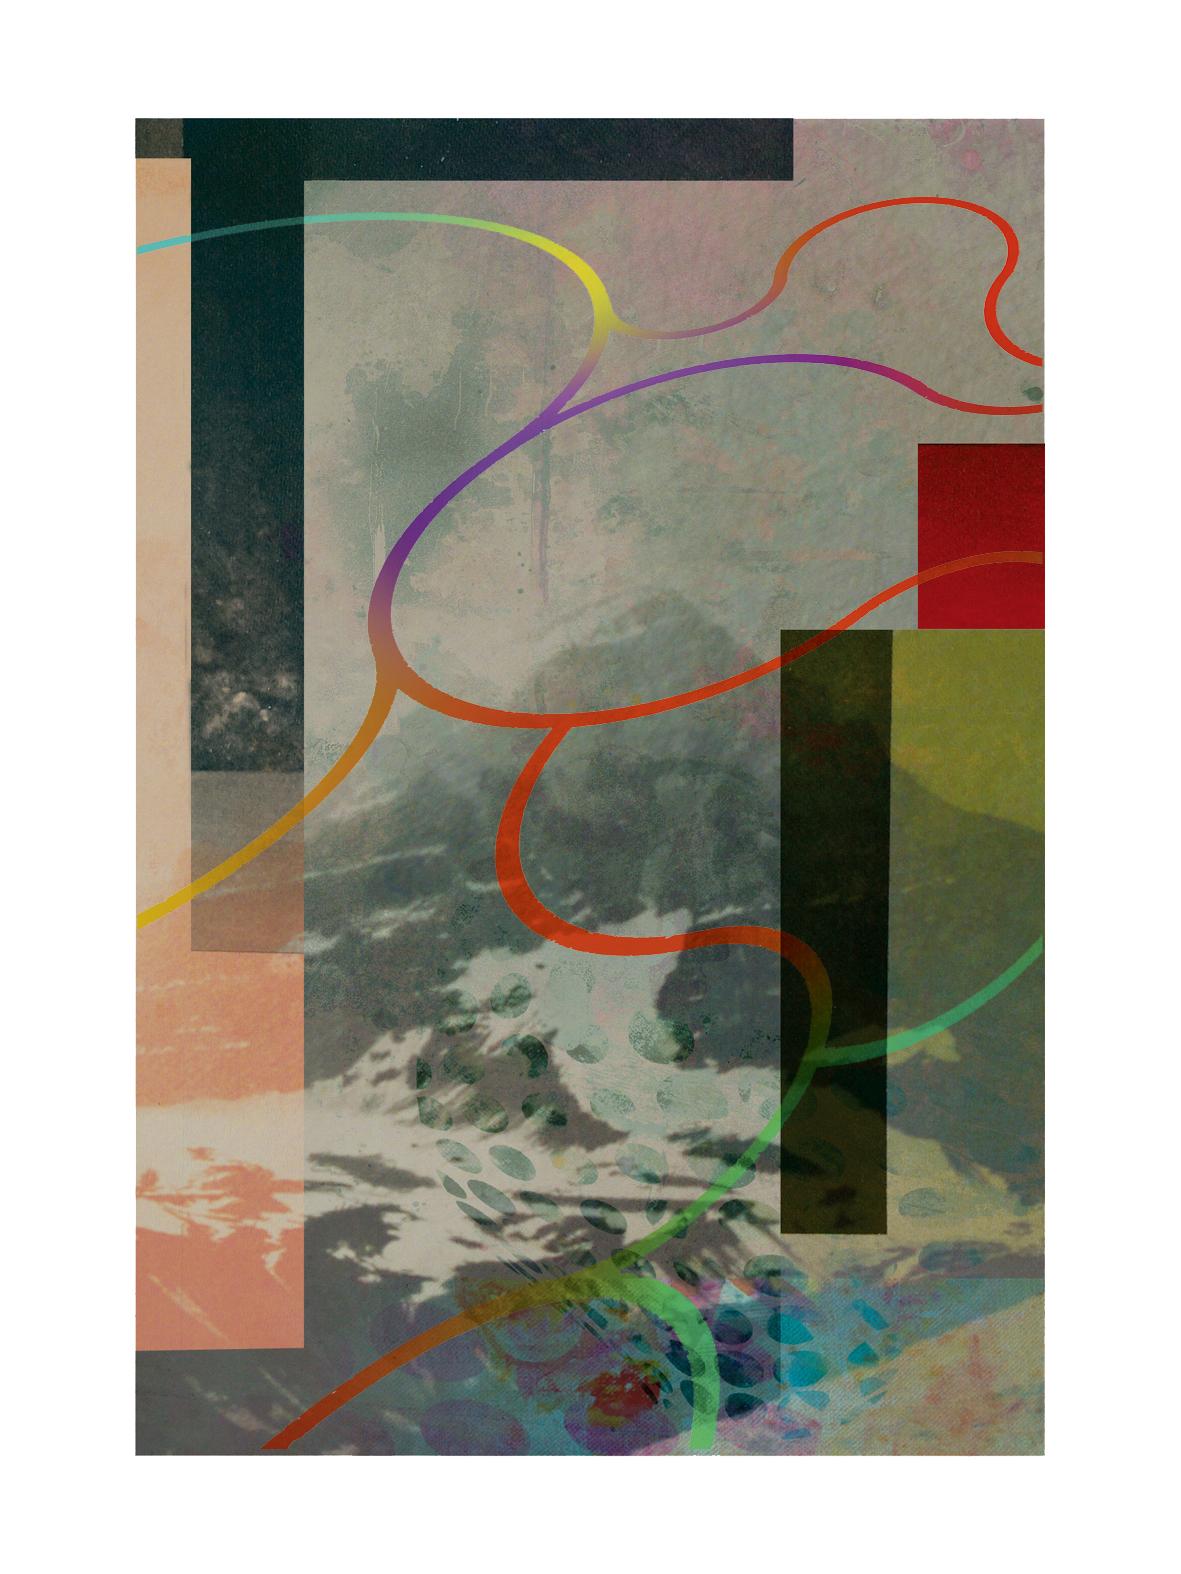 Francisco Nicolás Landscape Print - Mountains 002 - Contemporary, Abstract, Modern, Pop art, Surrealist, Landscape